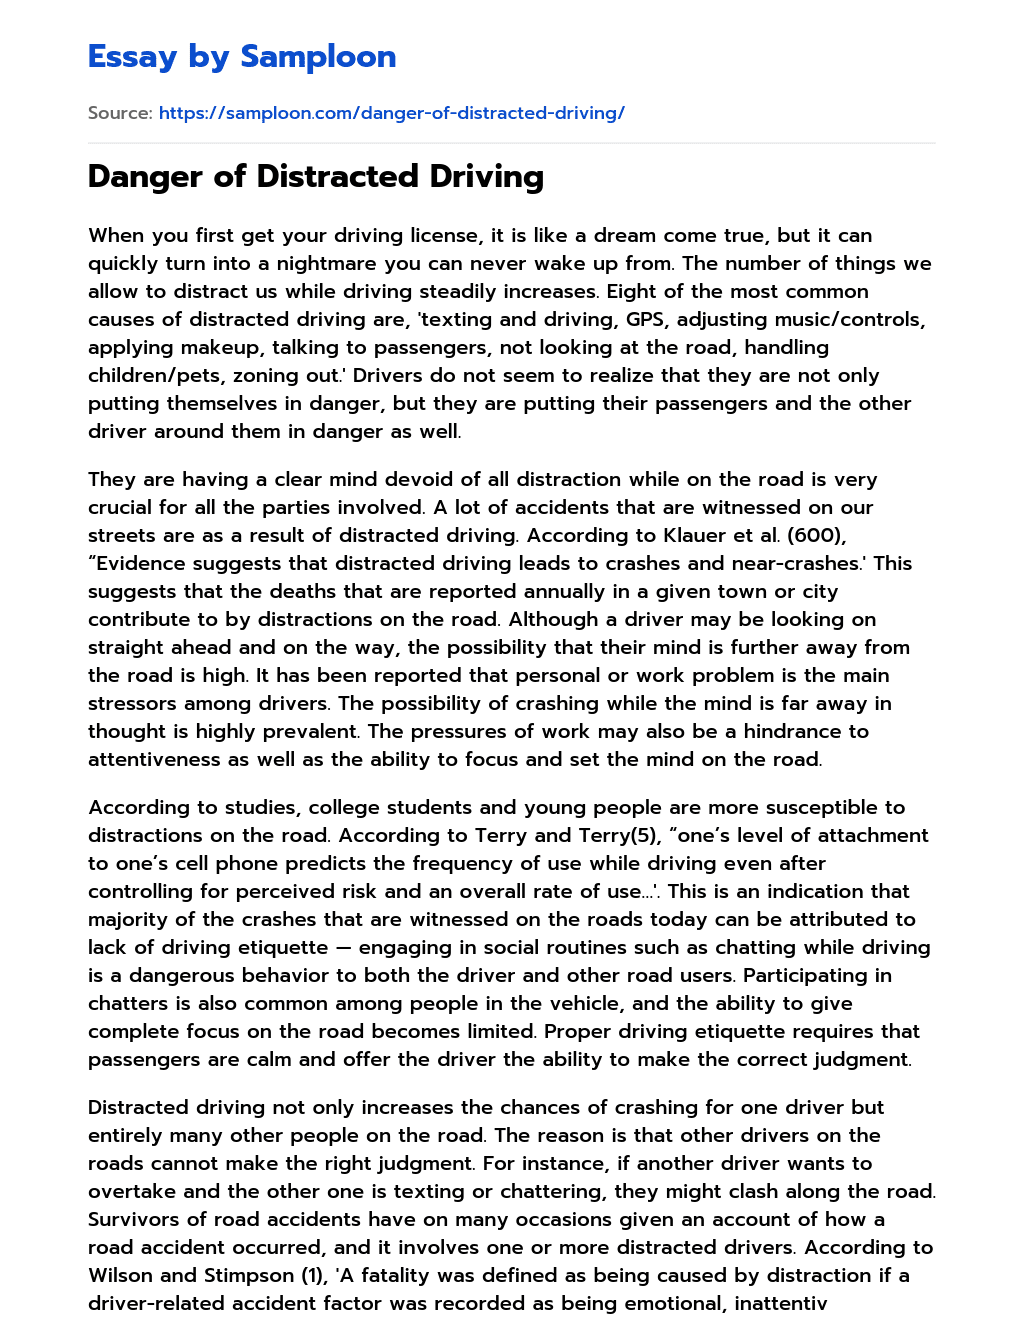 Danger of Distracted Driving essay